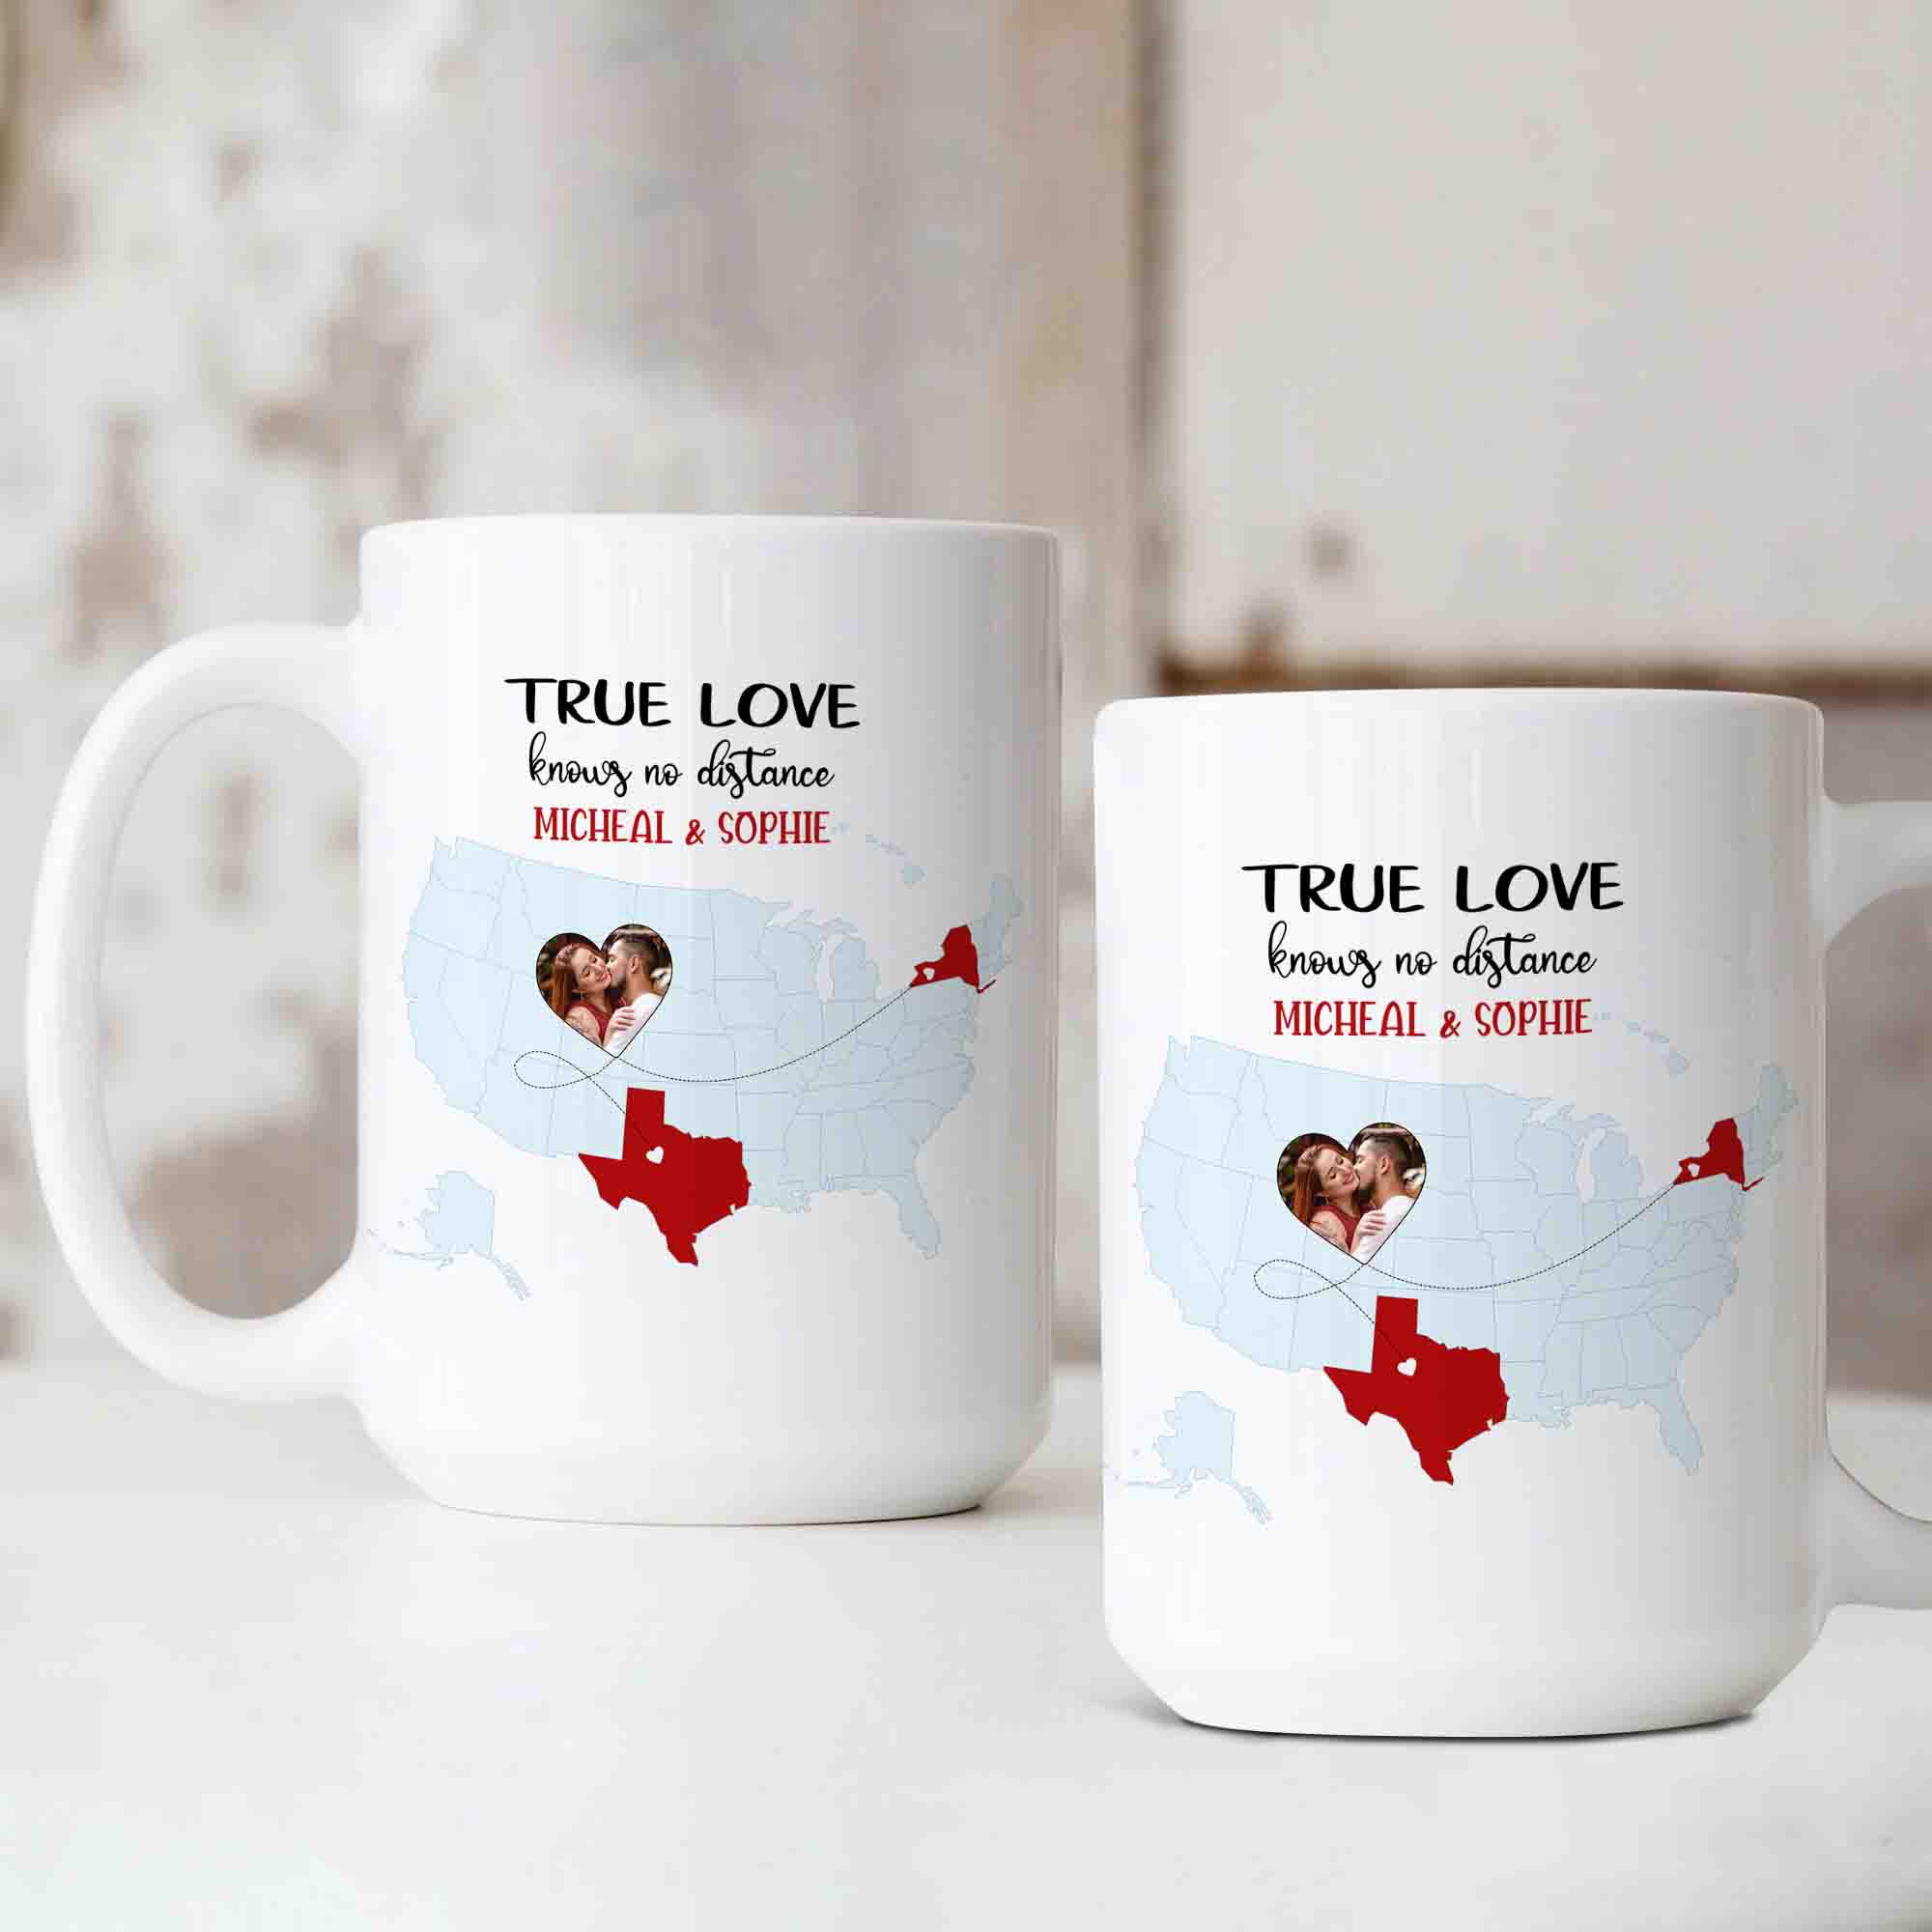 True Love Knows No Distance Mug, Long Distance Mug For Couple, State Mug, Couple Mug, Custom Name Mug, Custom Image Mug, Valentine's Day Mug